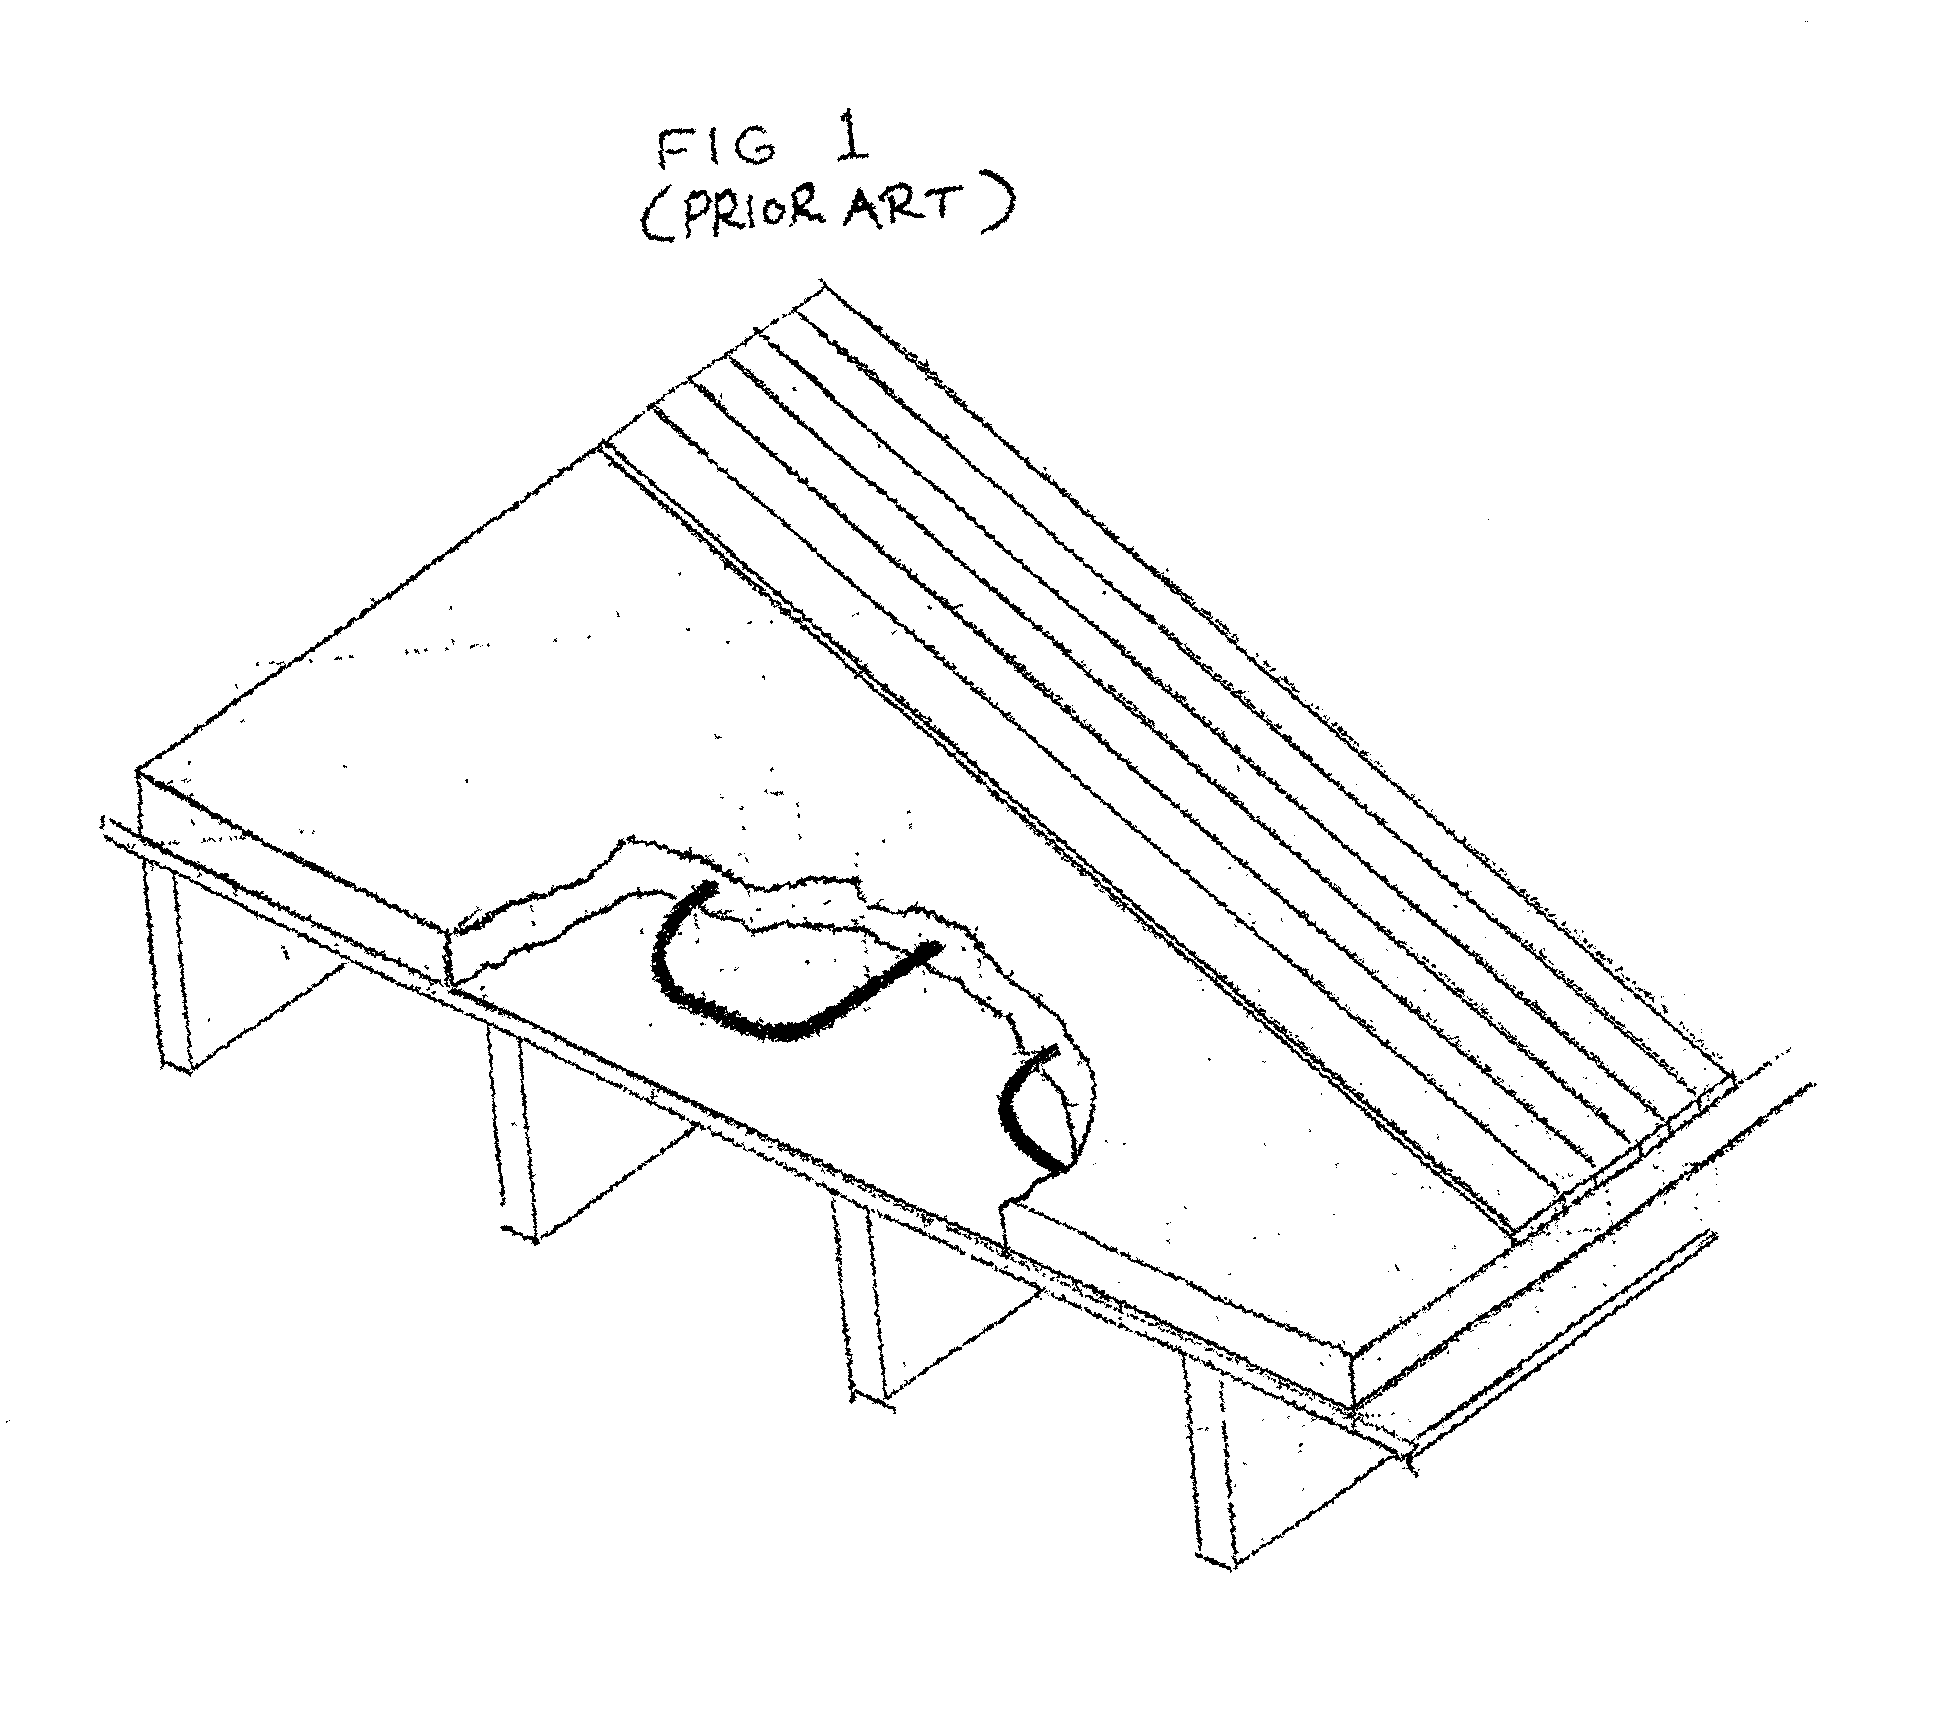 Modular radiant heat panel system